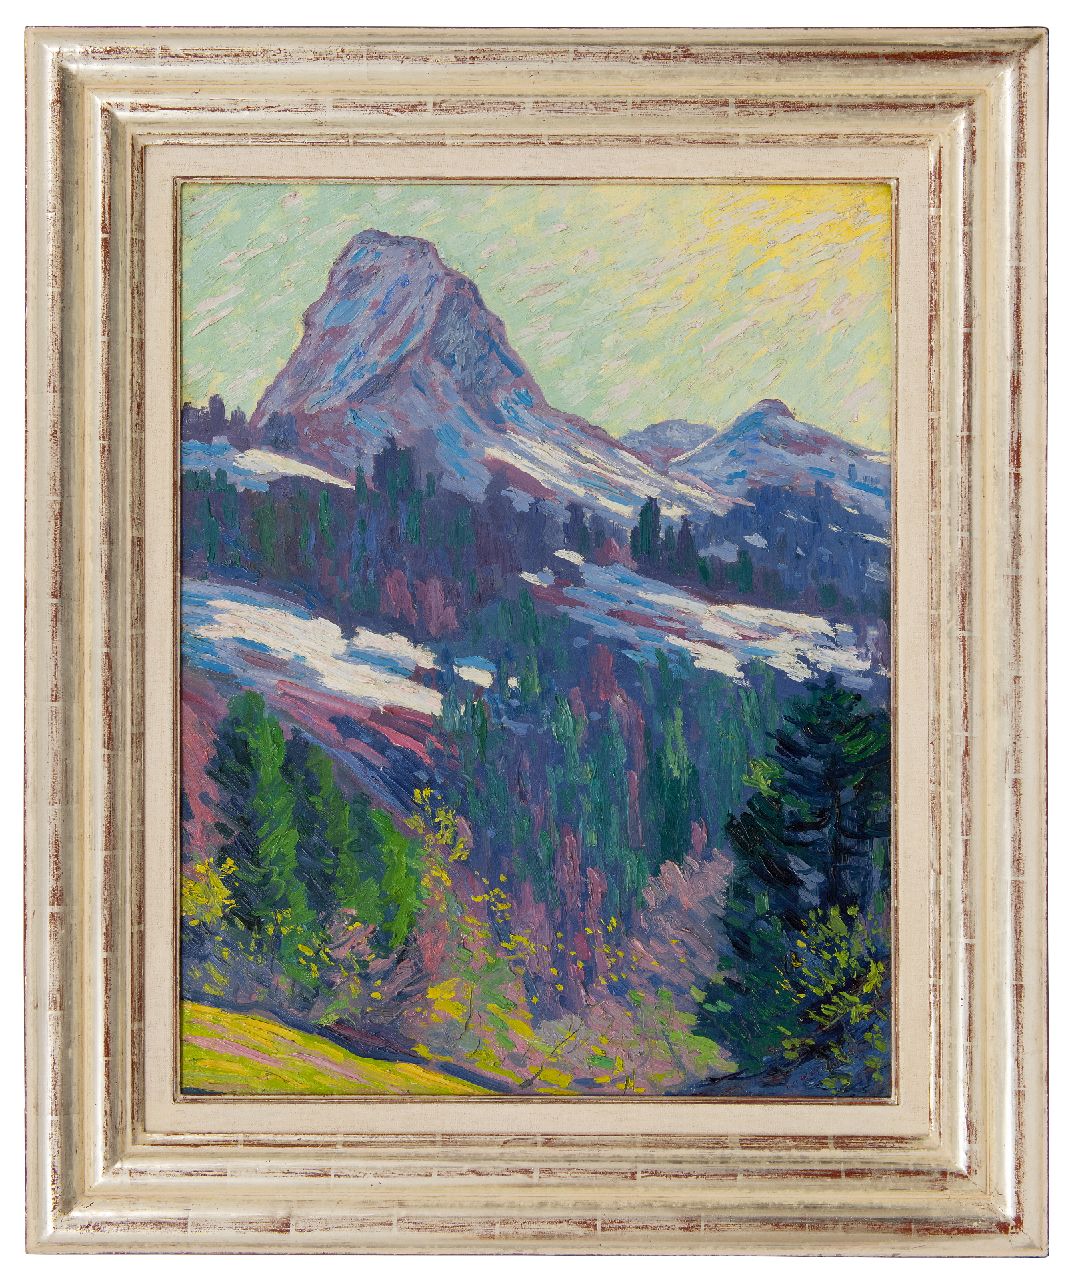 Filarski D.H.W.  | 'Dirk' Herman Willem Filarski | Paintings offered for sale | Dent de Jaman near Montreux, oil on canvas 69.9 x 54.8 cm, signed l.r. and dated '12